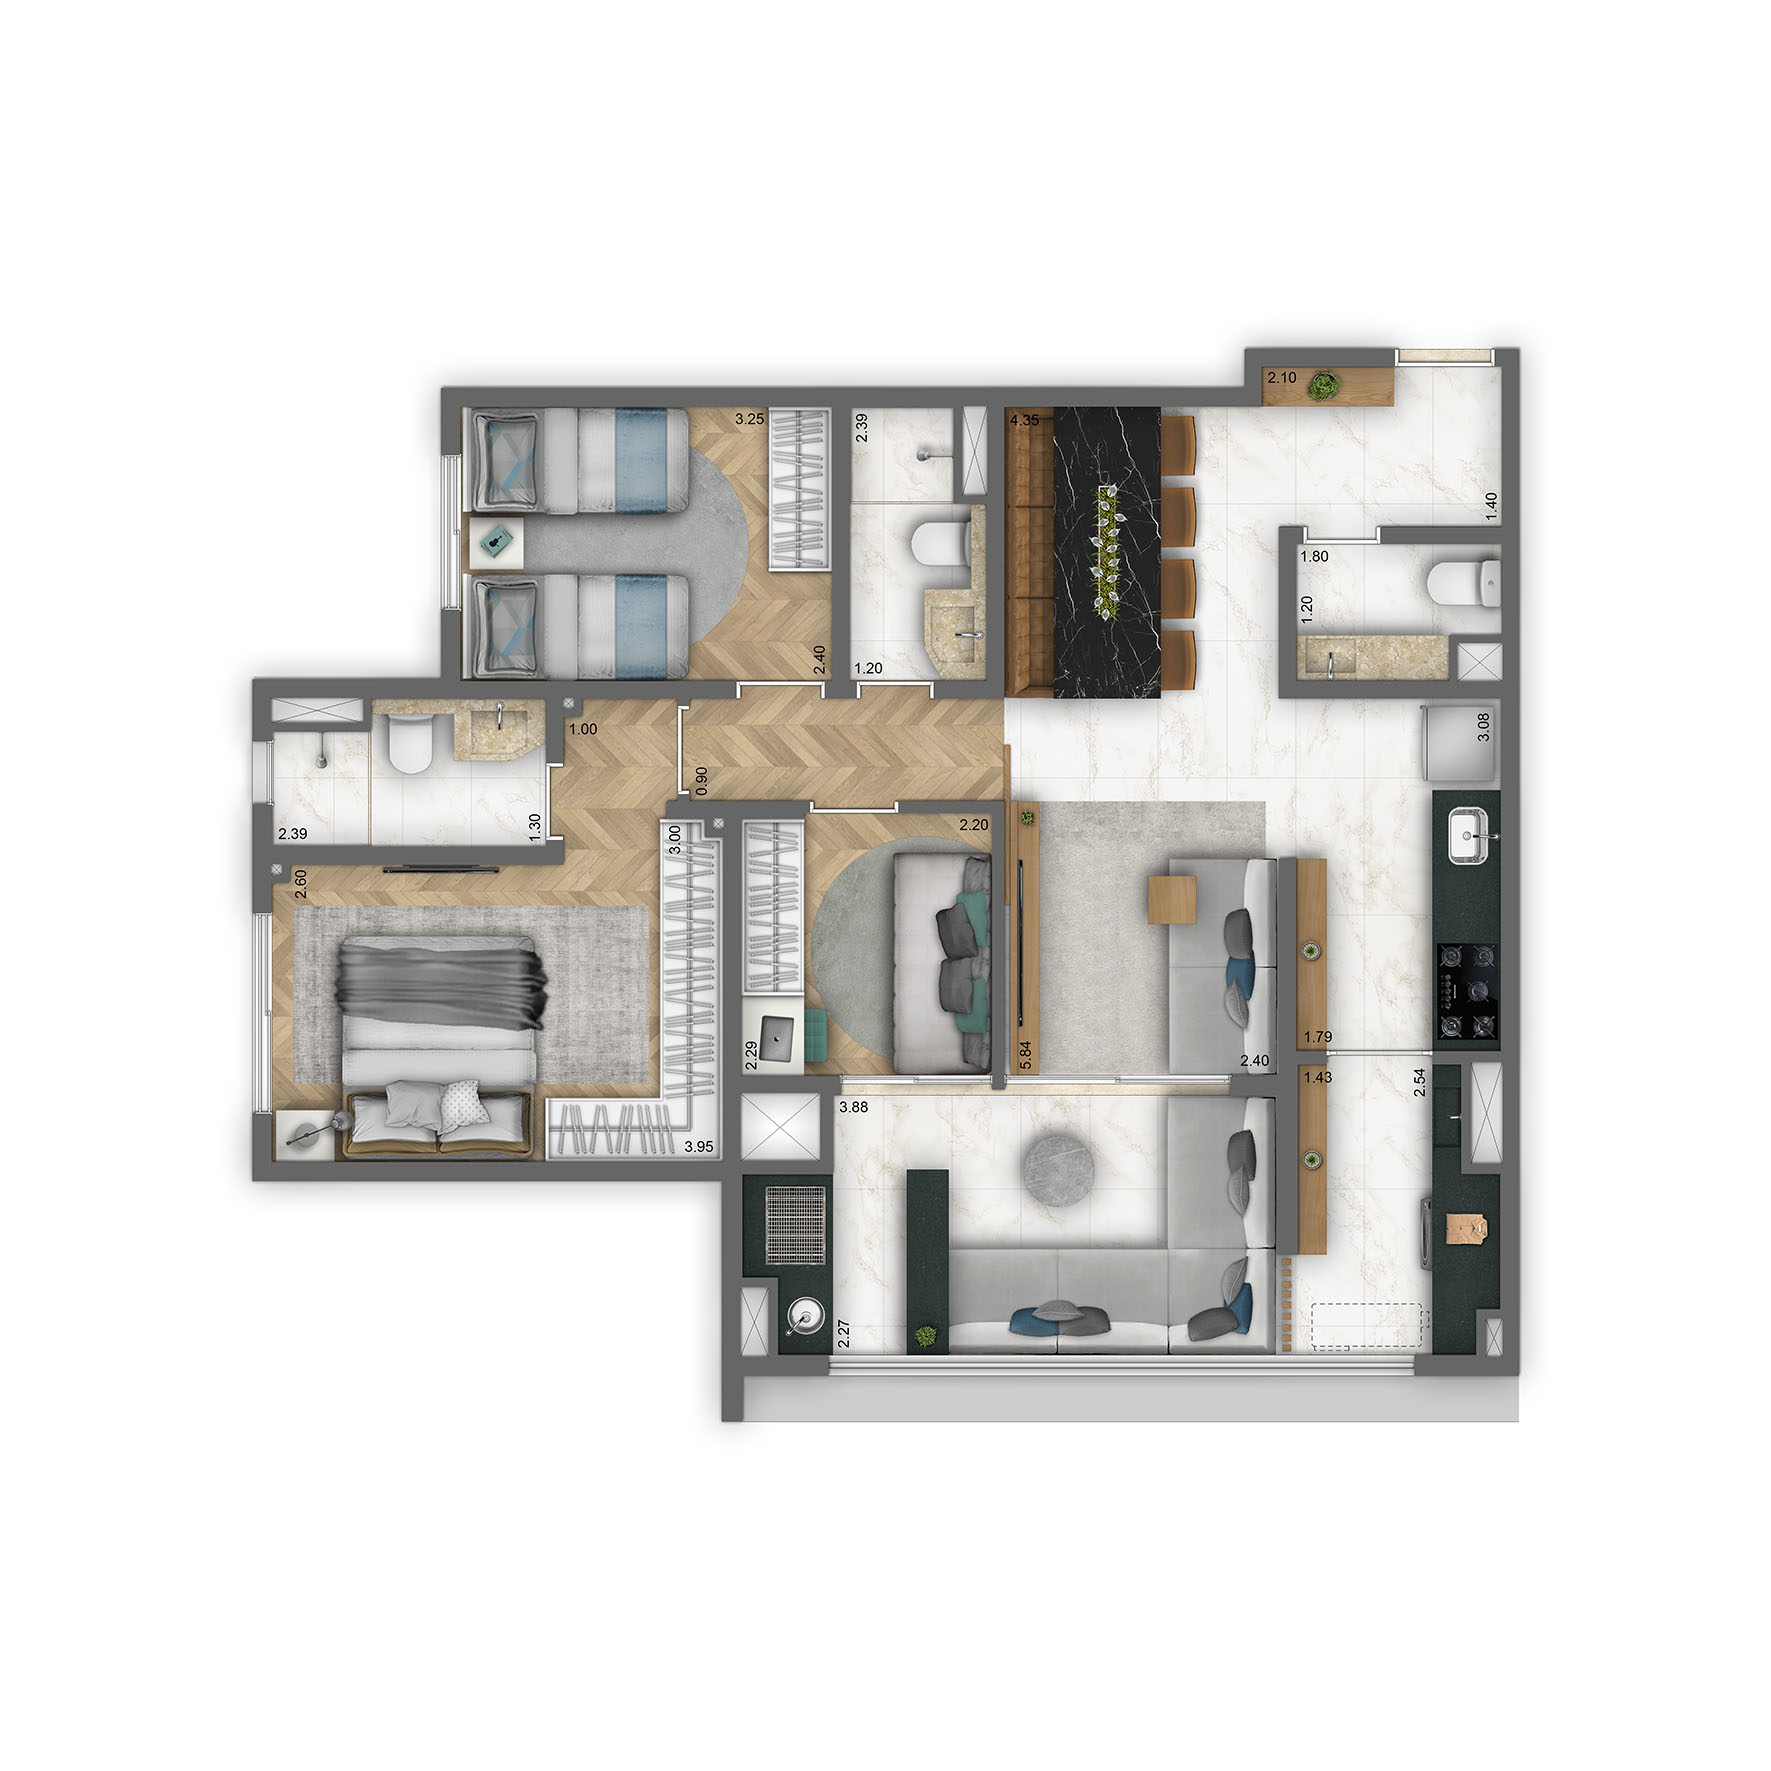 82 m² (3 dorms)